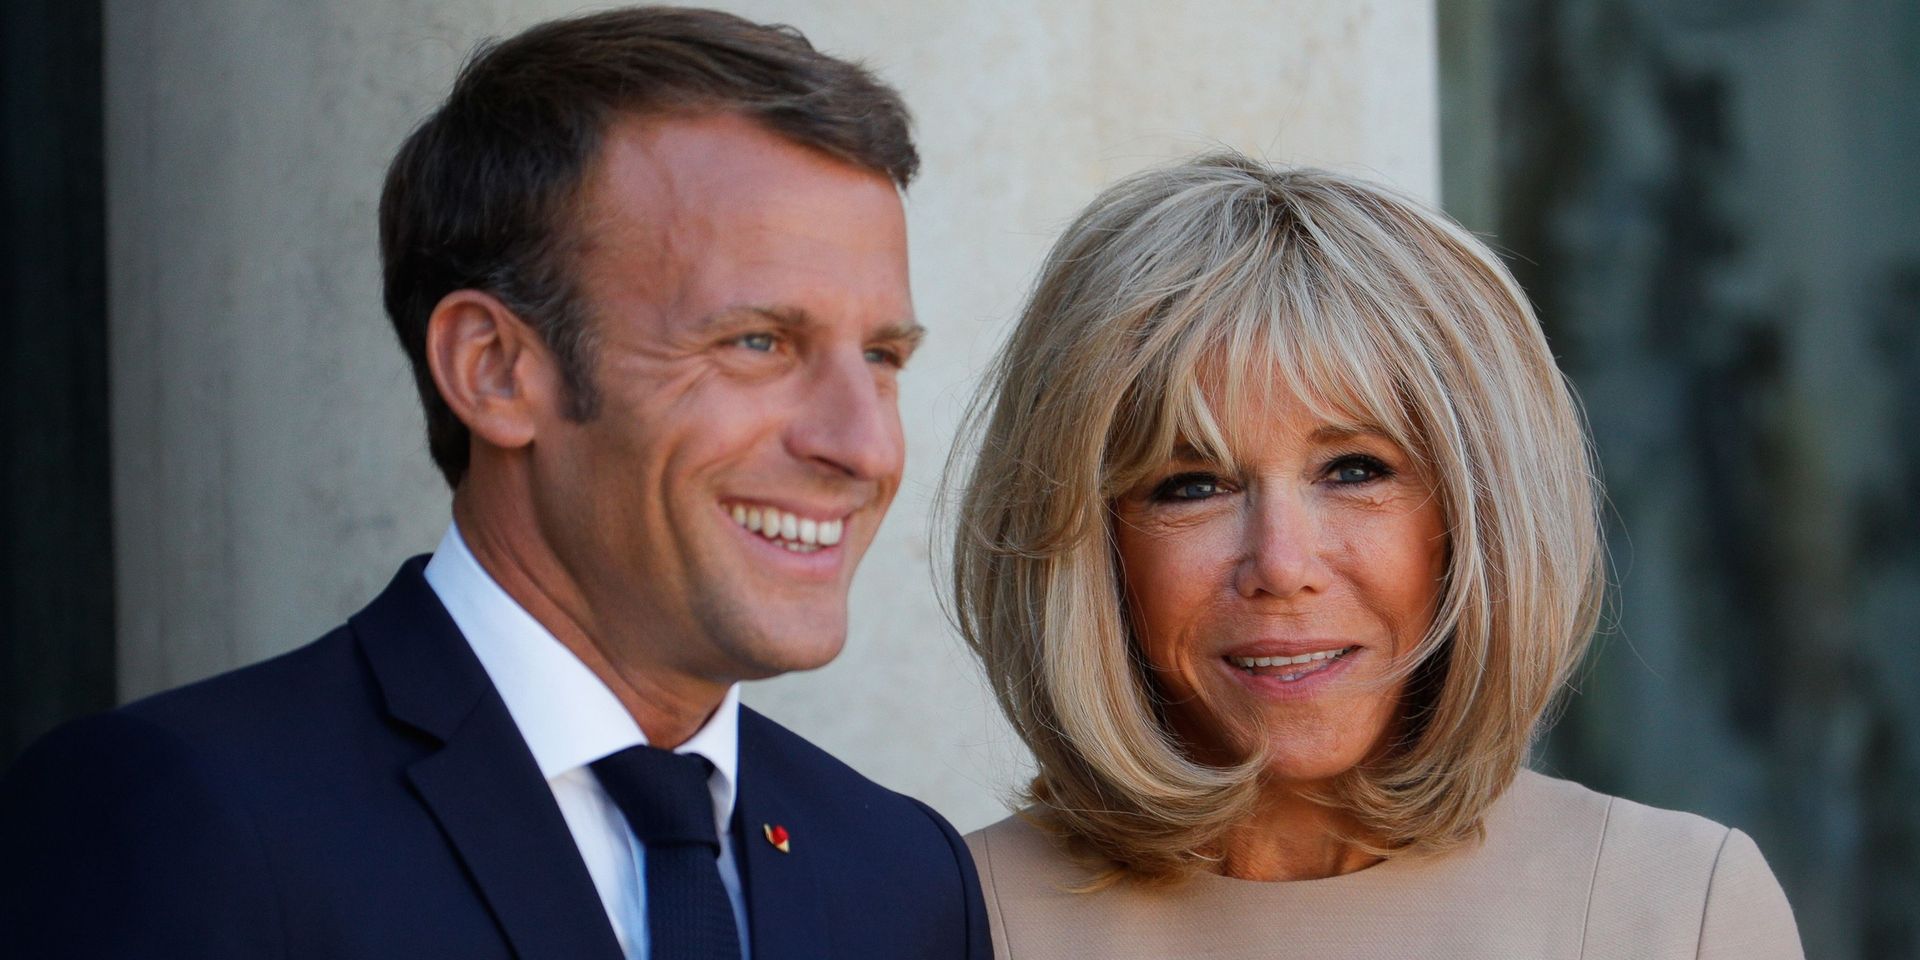  Emmanuel Macron et Brigitte Macron ©GEOFFROY VAN DER HASSELT / AFP